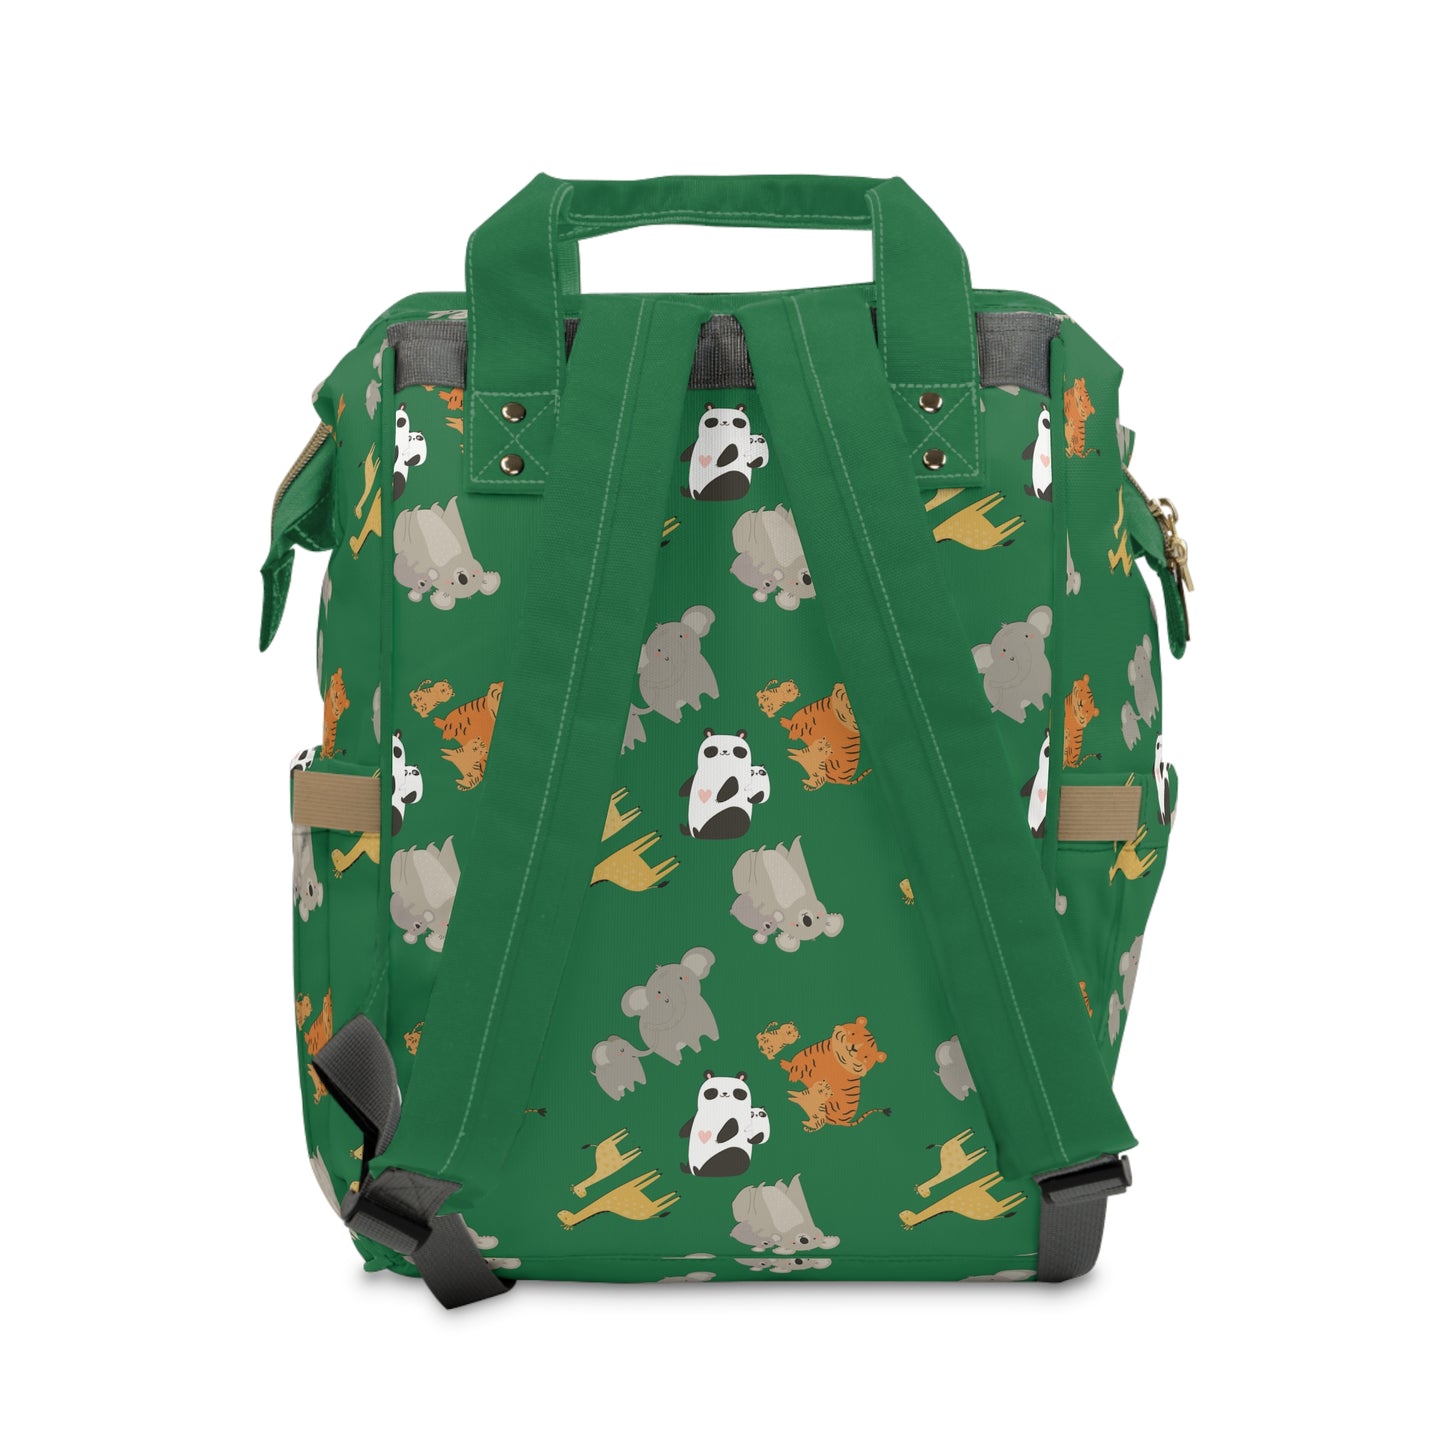 Koalas, Pandas, Giraffes, and Elephants OH MY!  - large print - Multifunctional Diaper Backpack